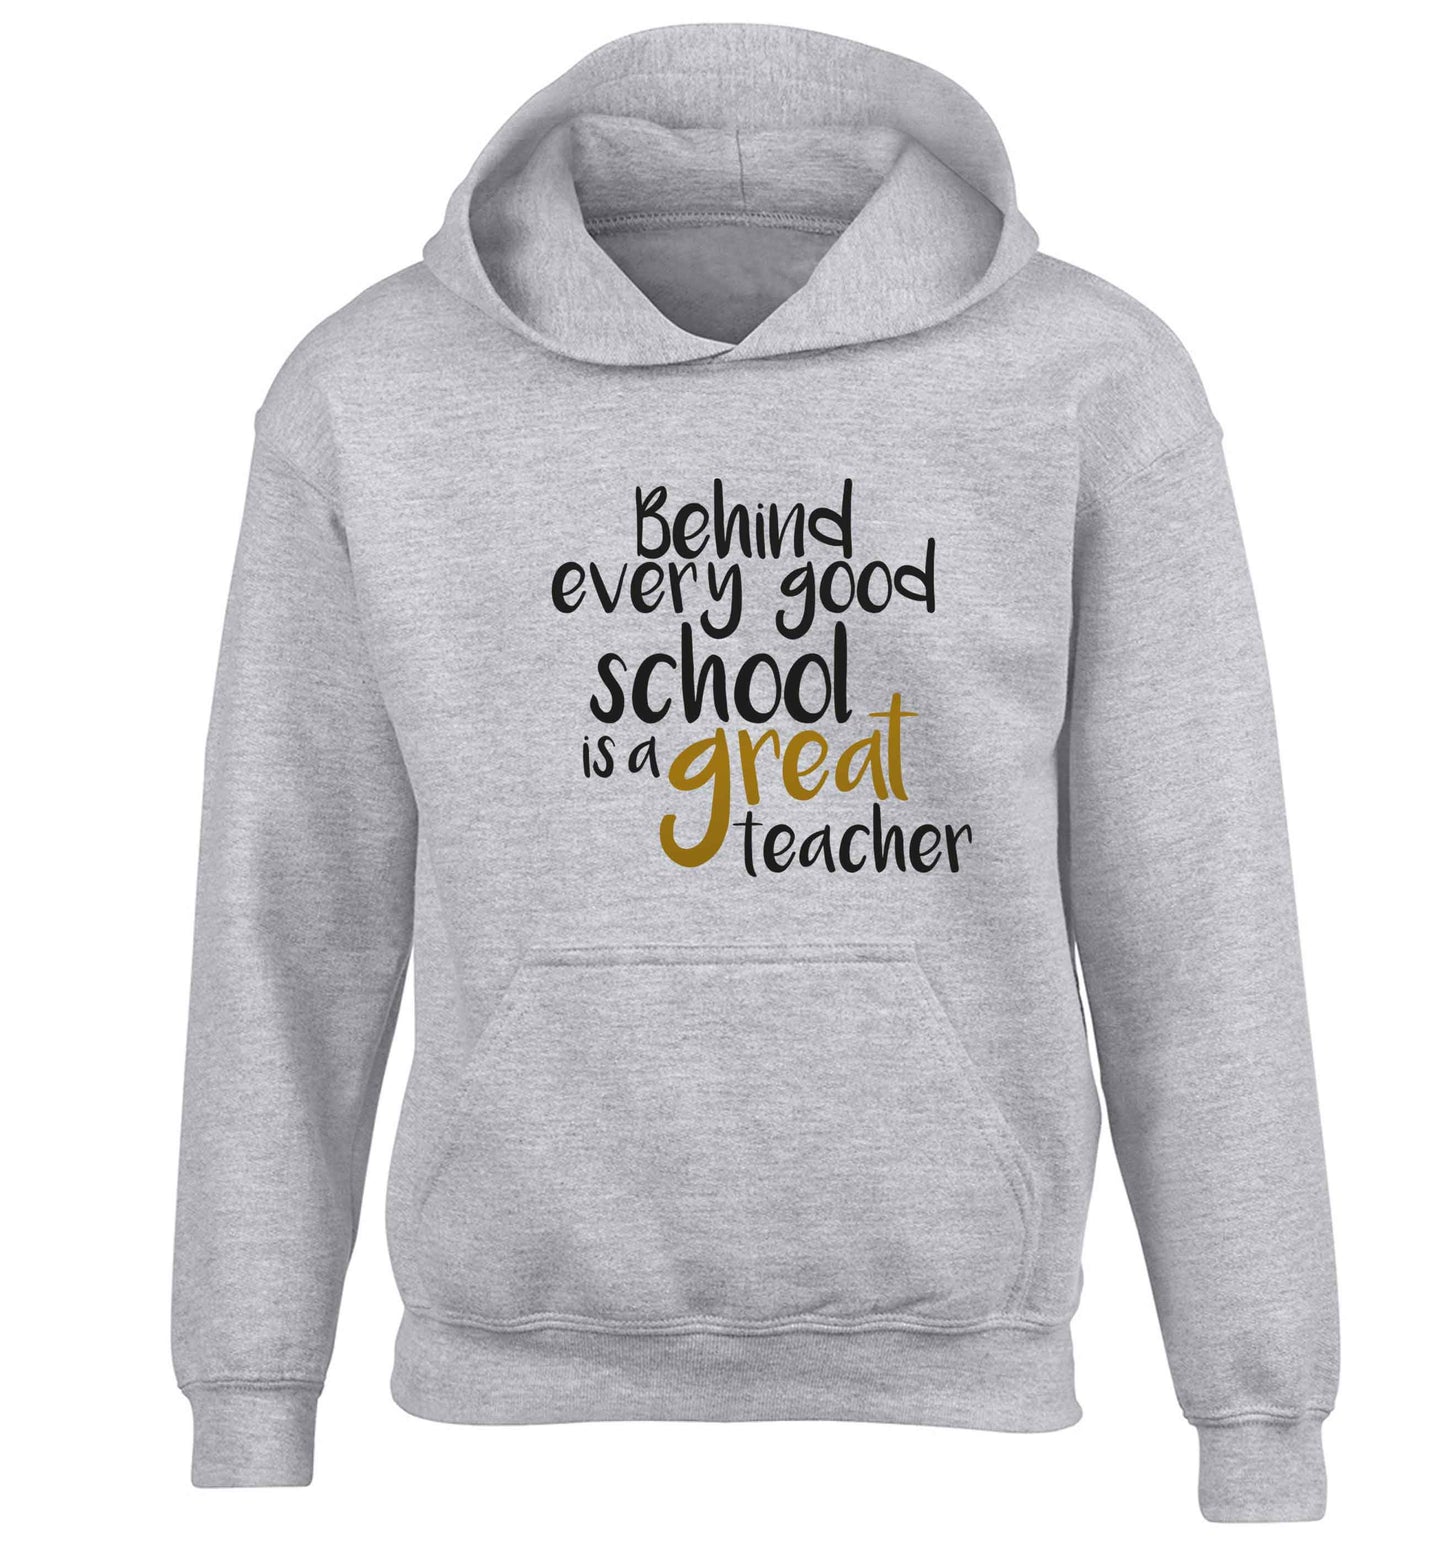 Behind every good school is a great teacher children's grey hoodie 12-13 Years